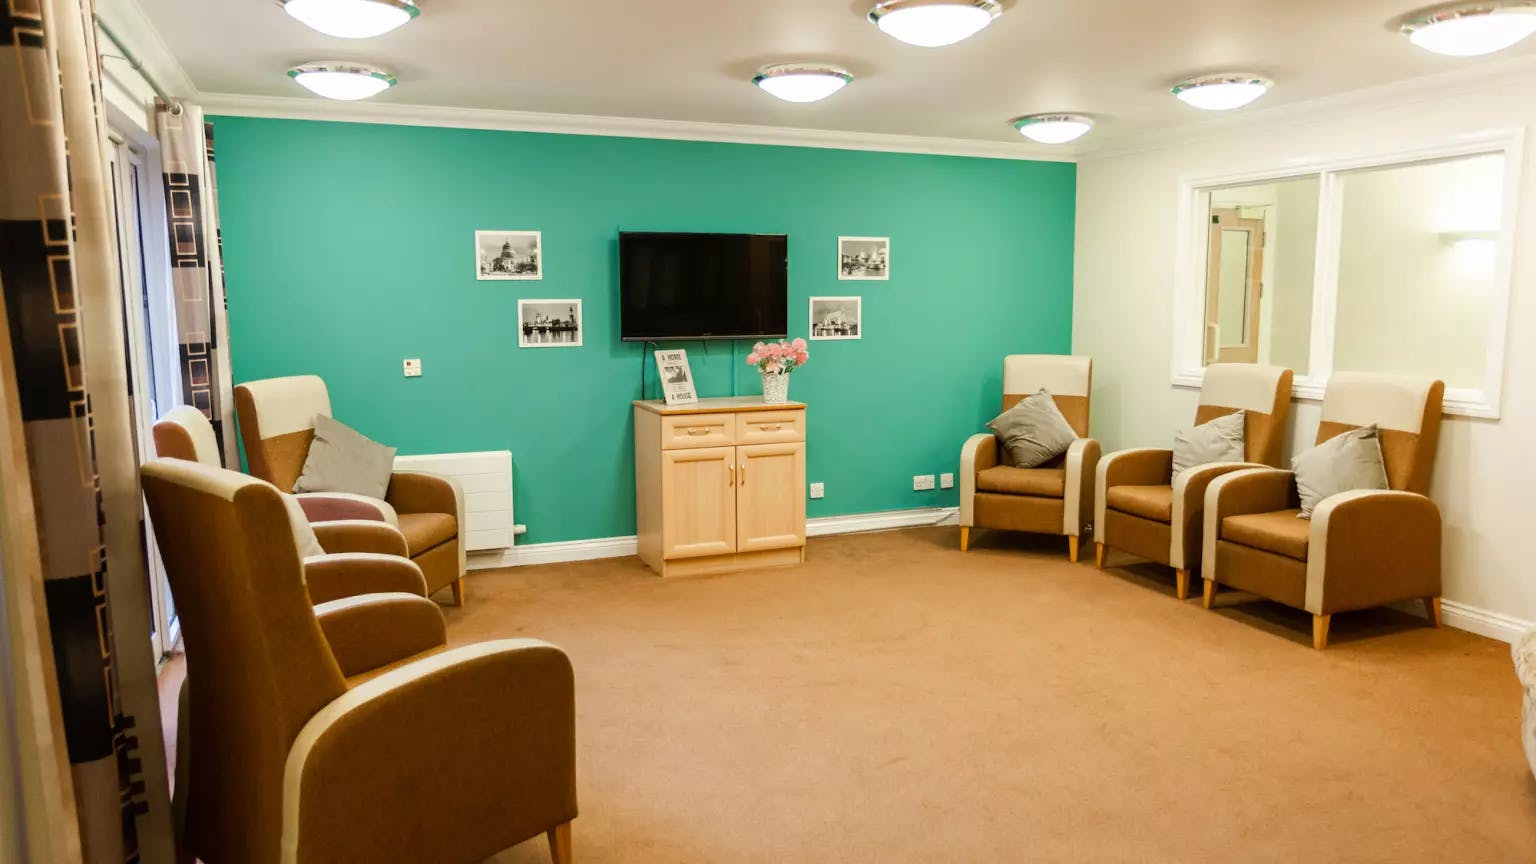 Lounge of Tye Green Lodge care home in Harlow, Essex